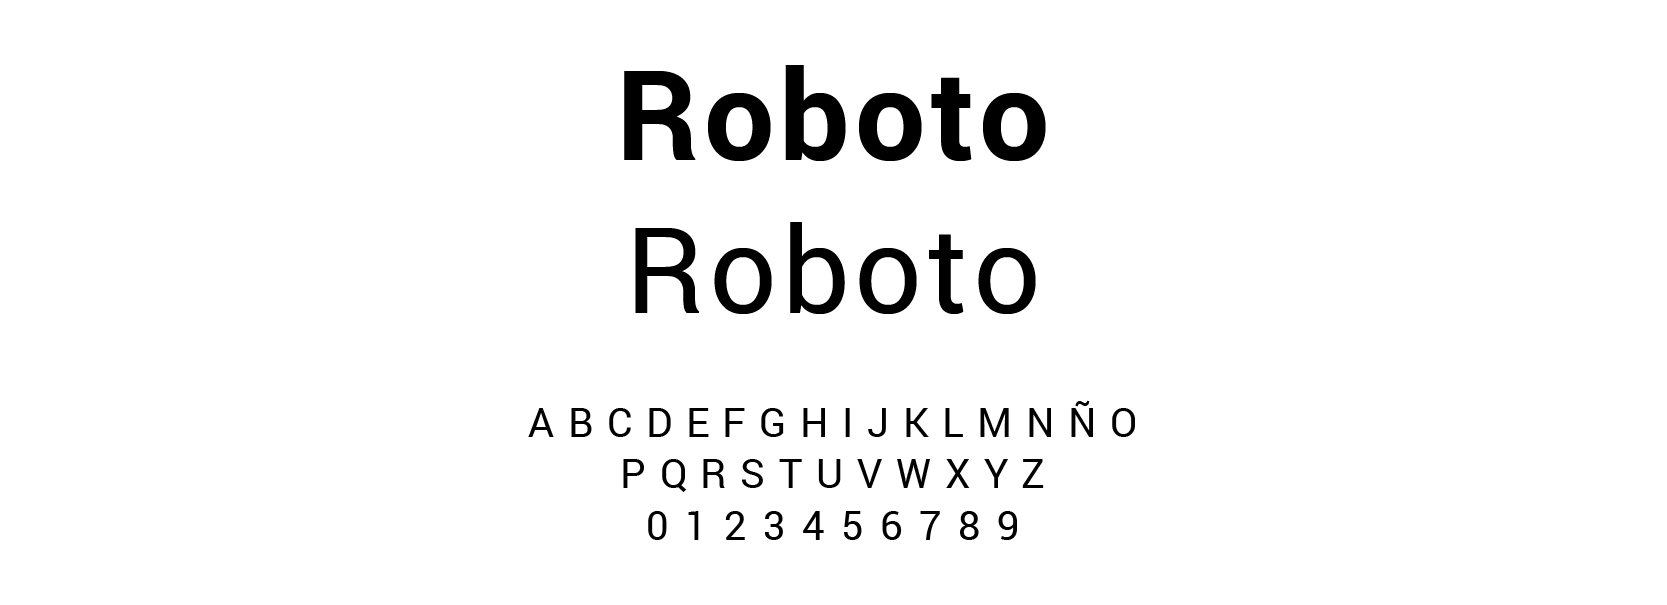 Roboto Tipografía Google Fonts